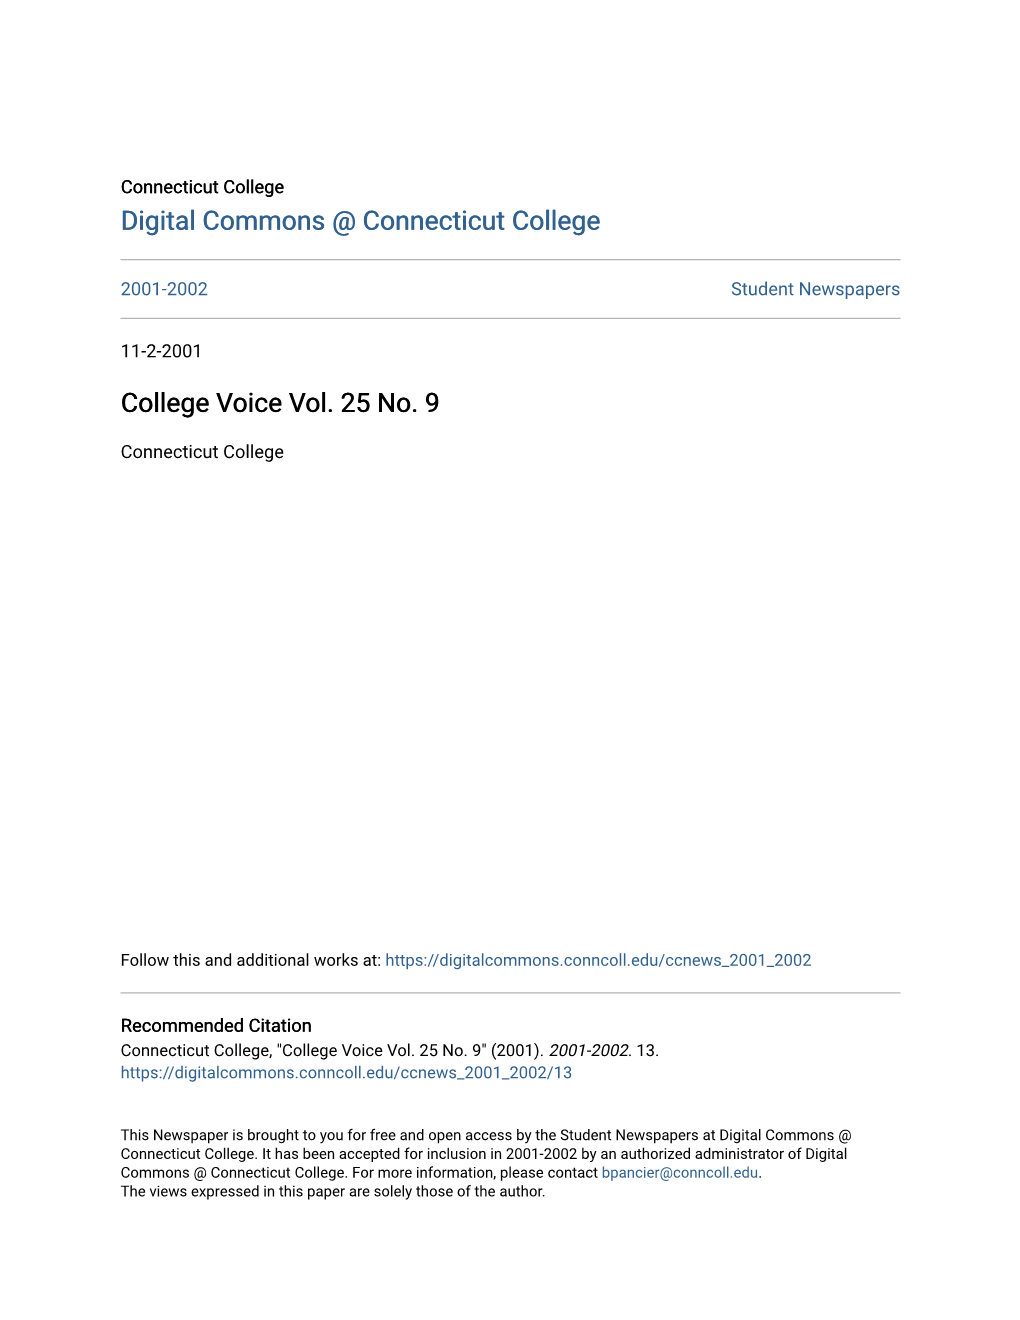 College Voice Vol. 25 No. 9